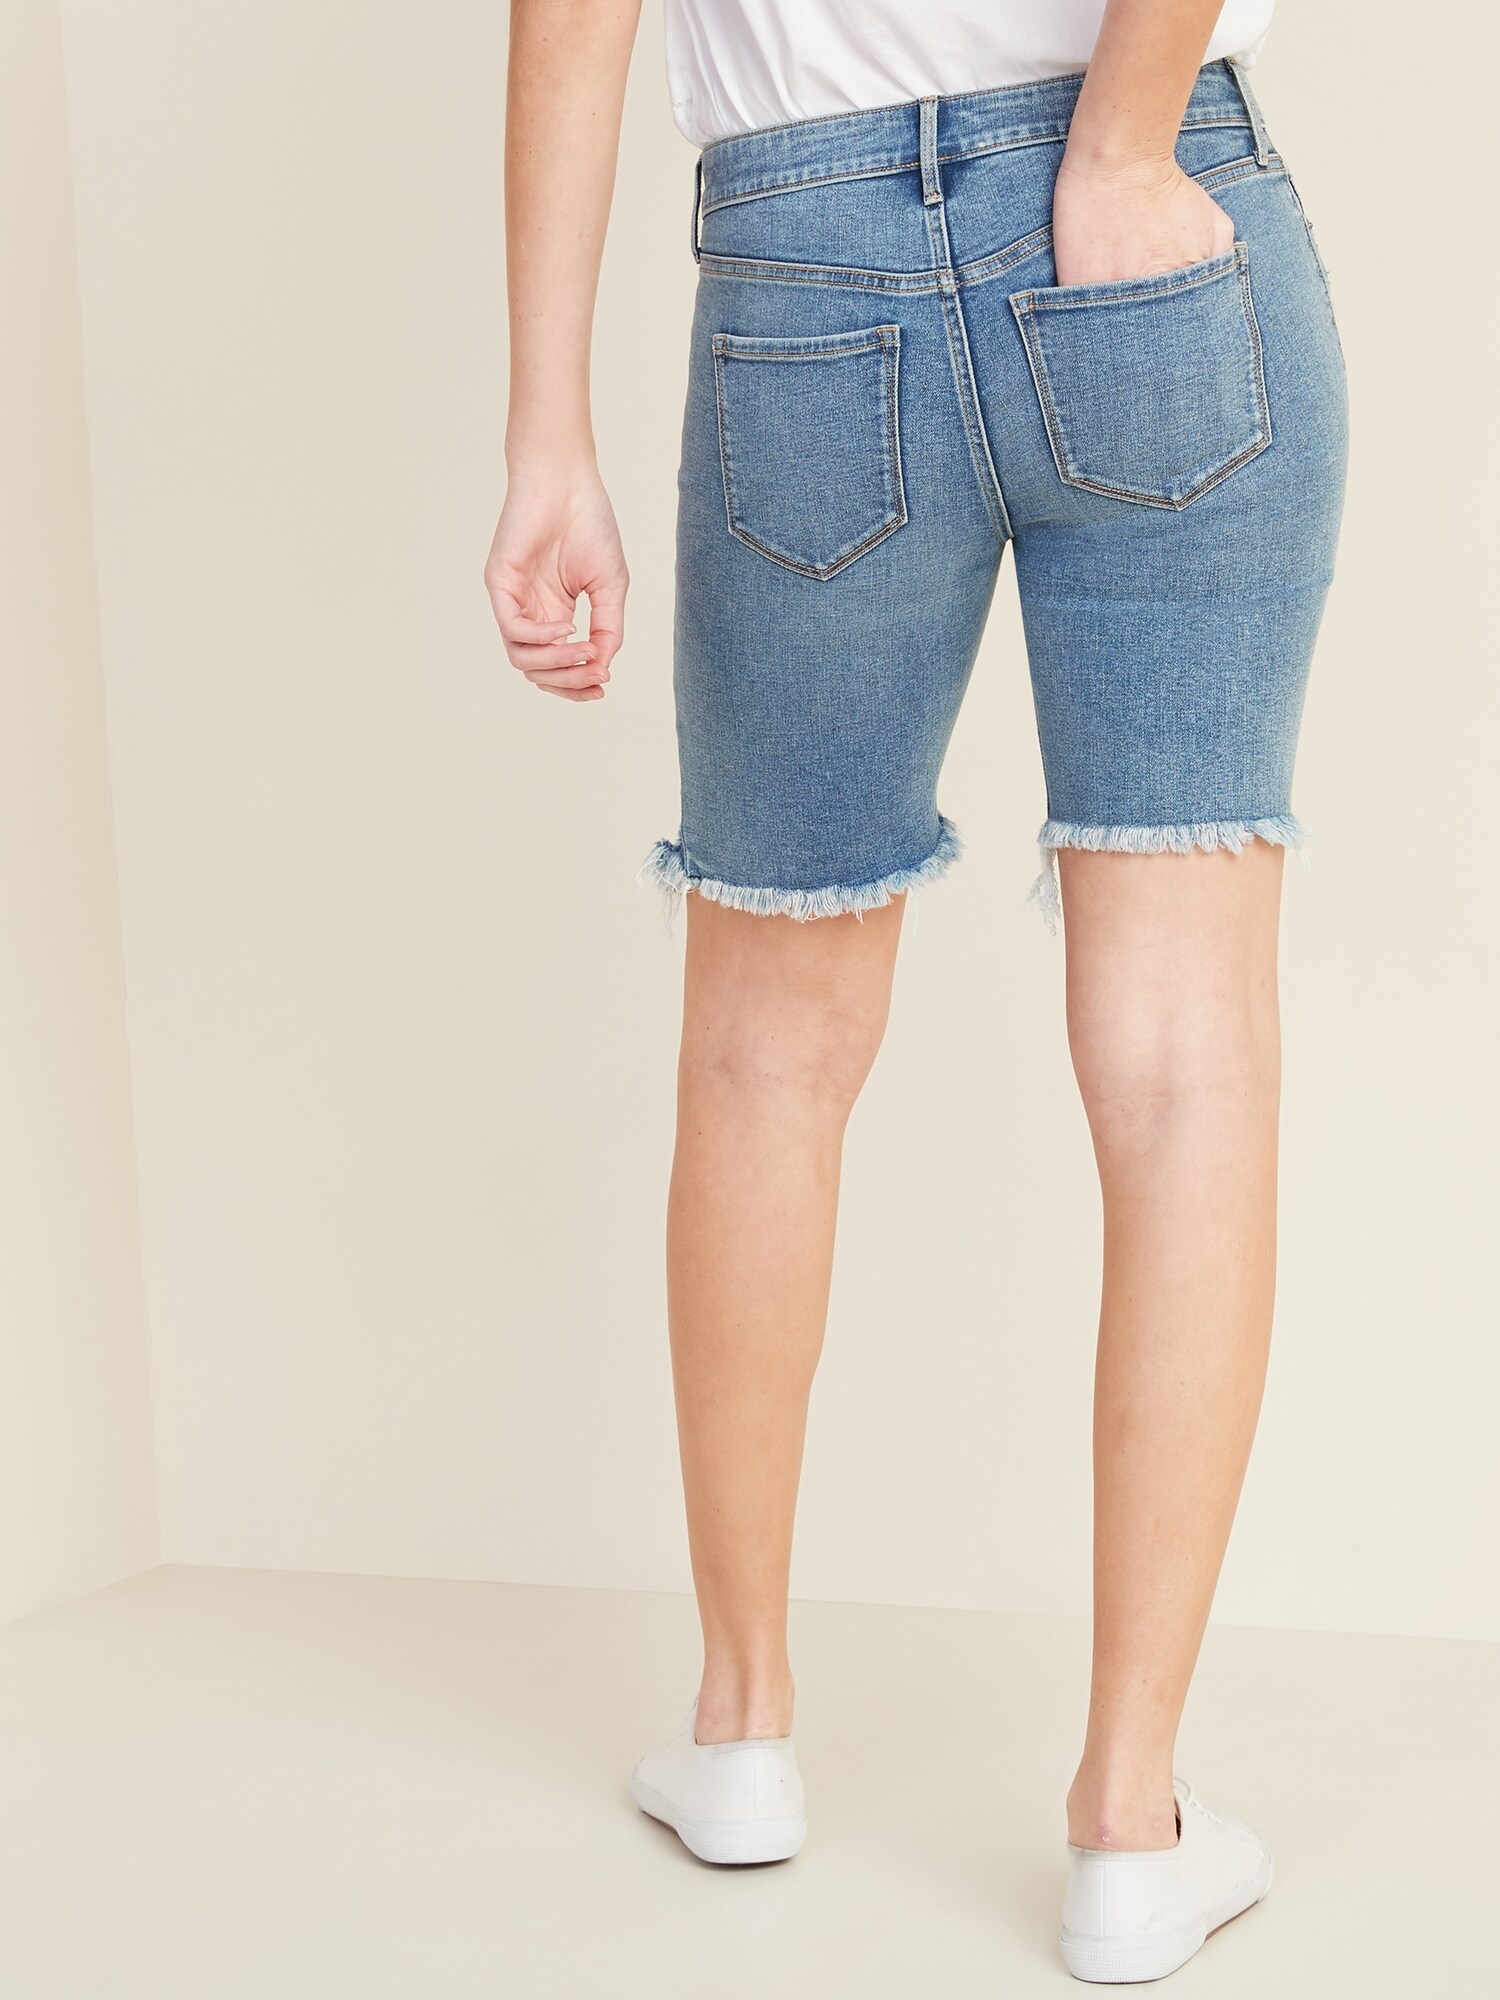 women's jeans bermuda shorts